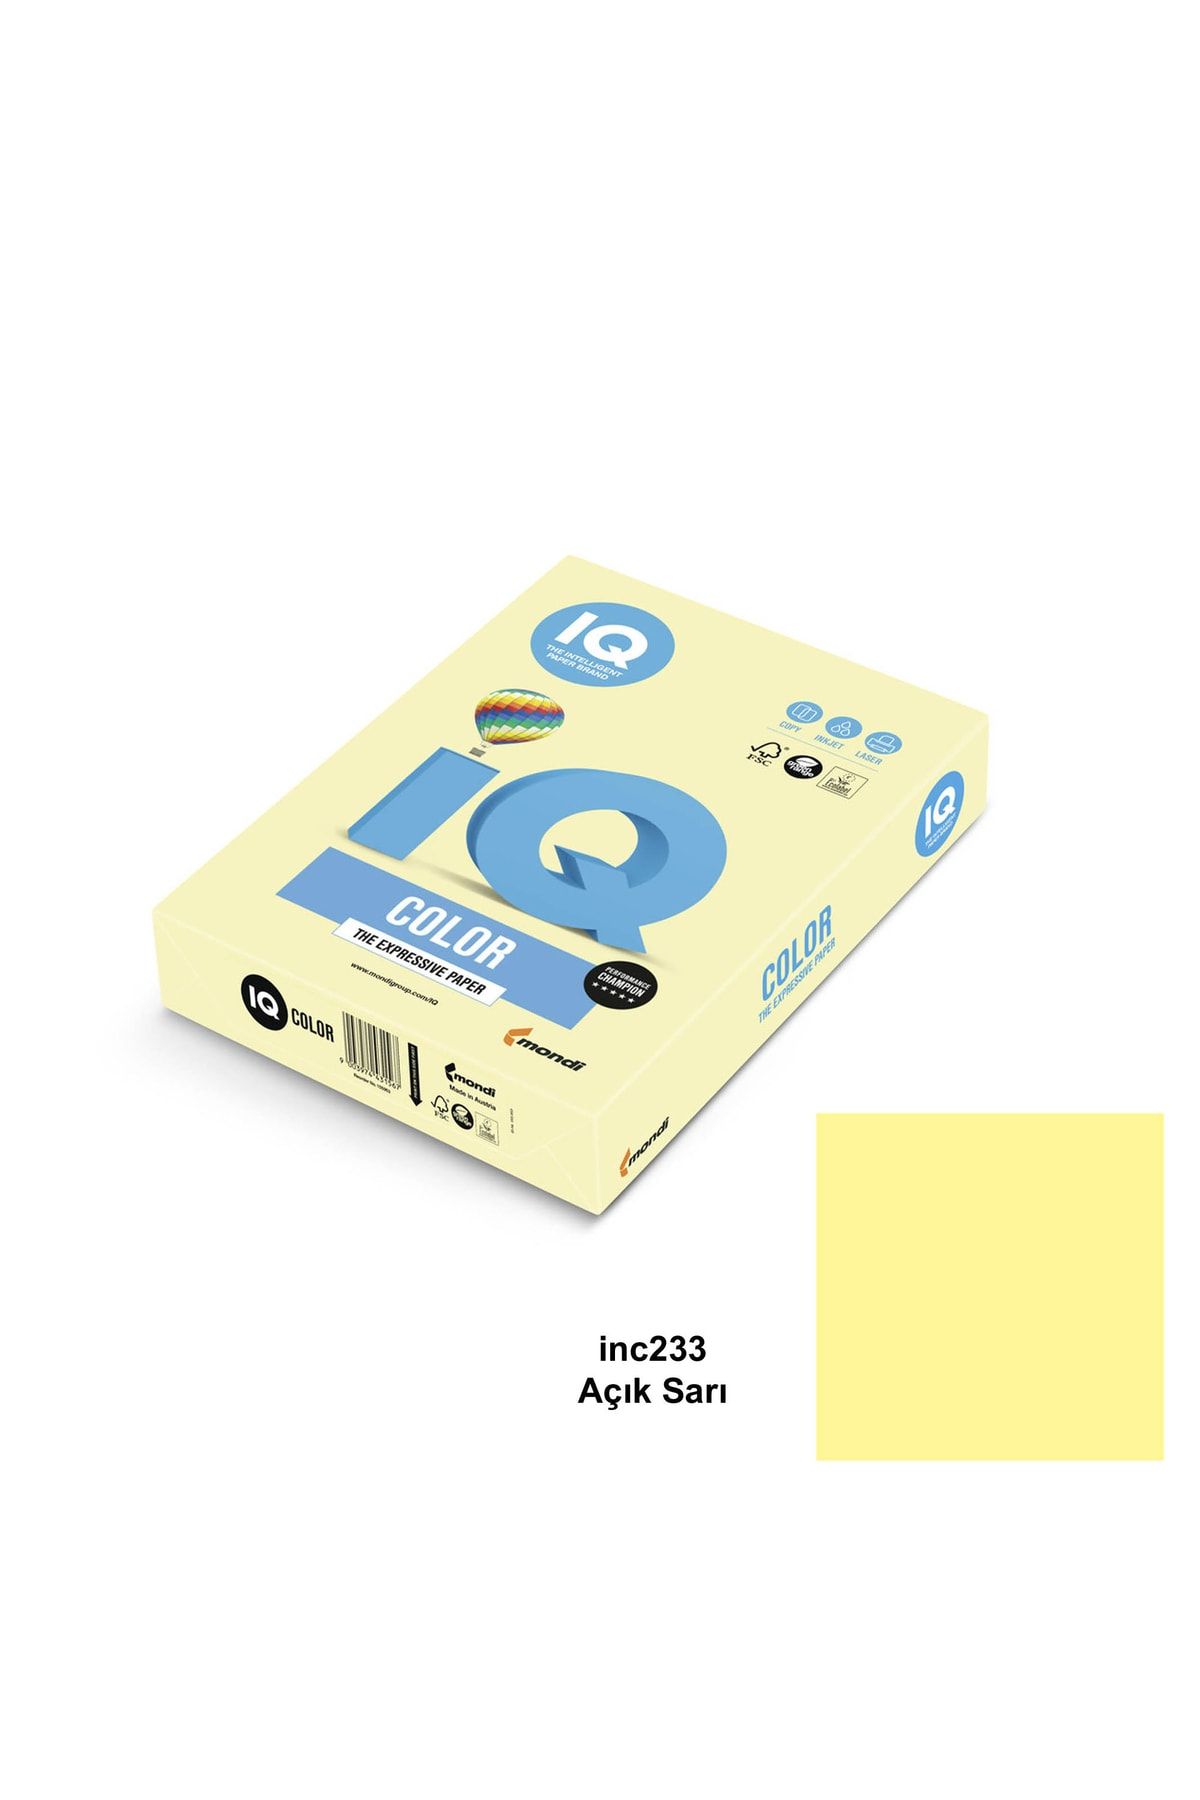 Mondi Iq Color A4 Renkli Fotokopi Kağıdı 80 gr Açık Sarı 1 Koli 5 Paket